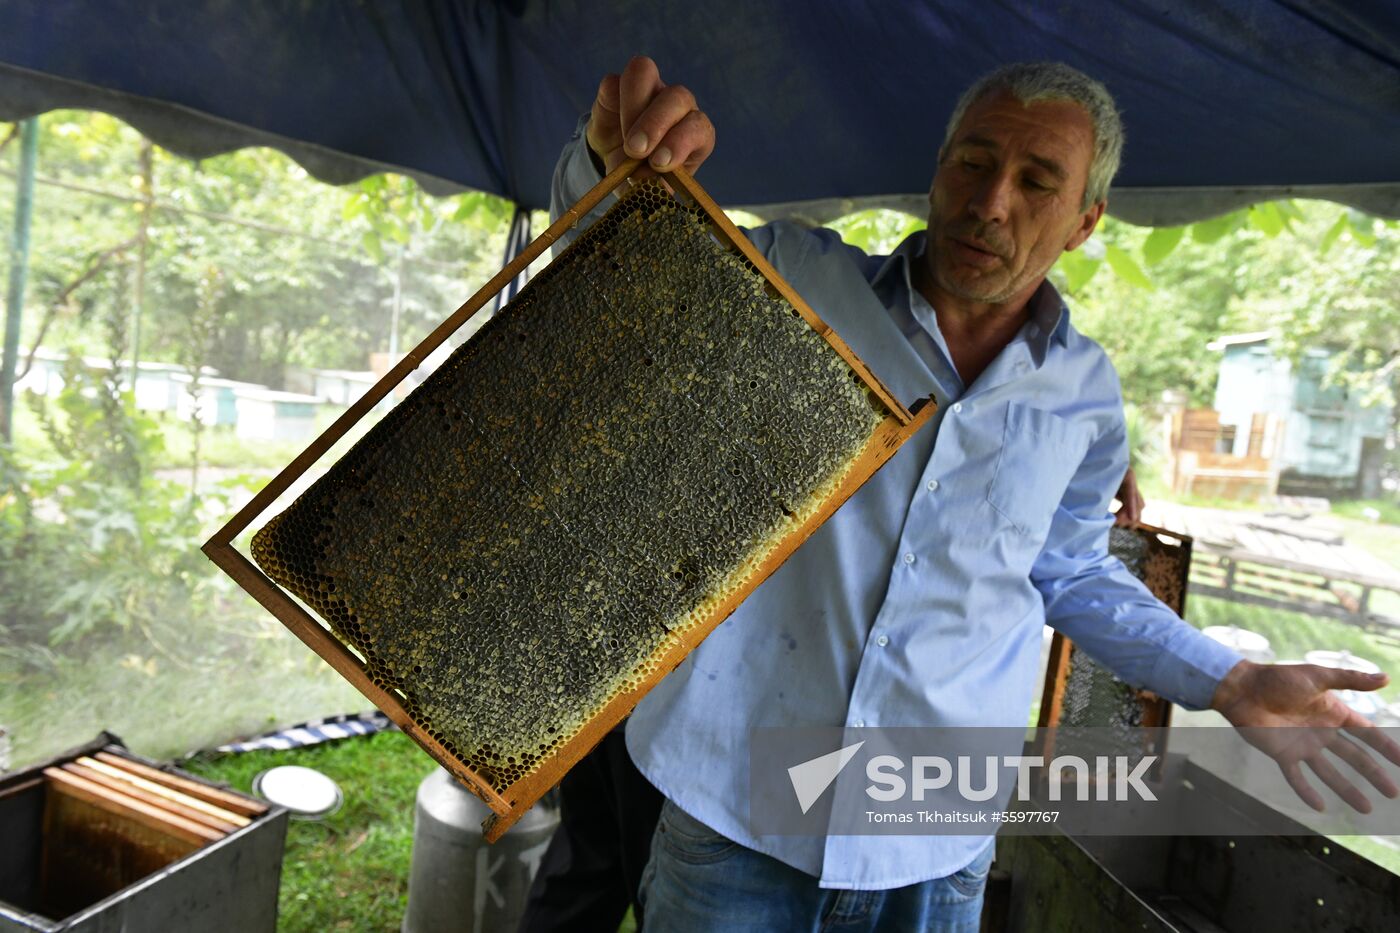 Honey harvesting in Abkhazia